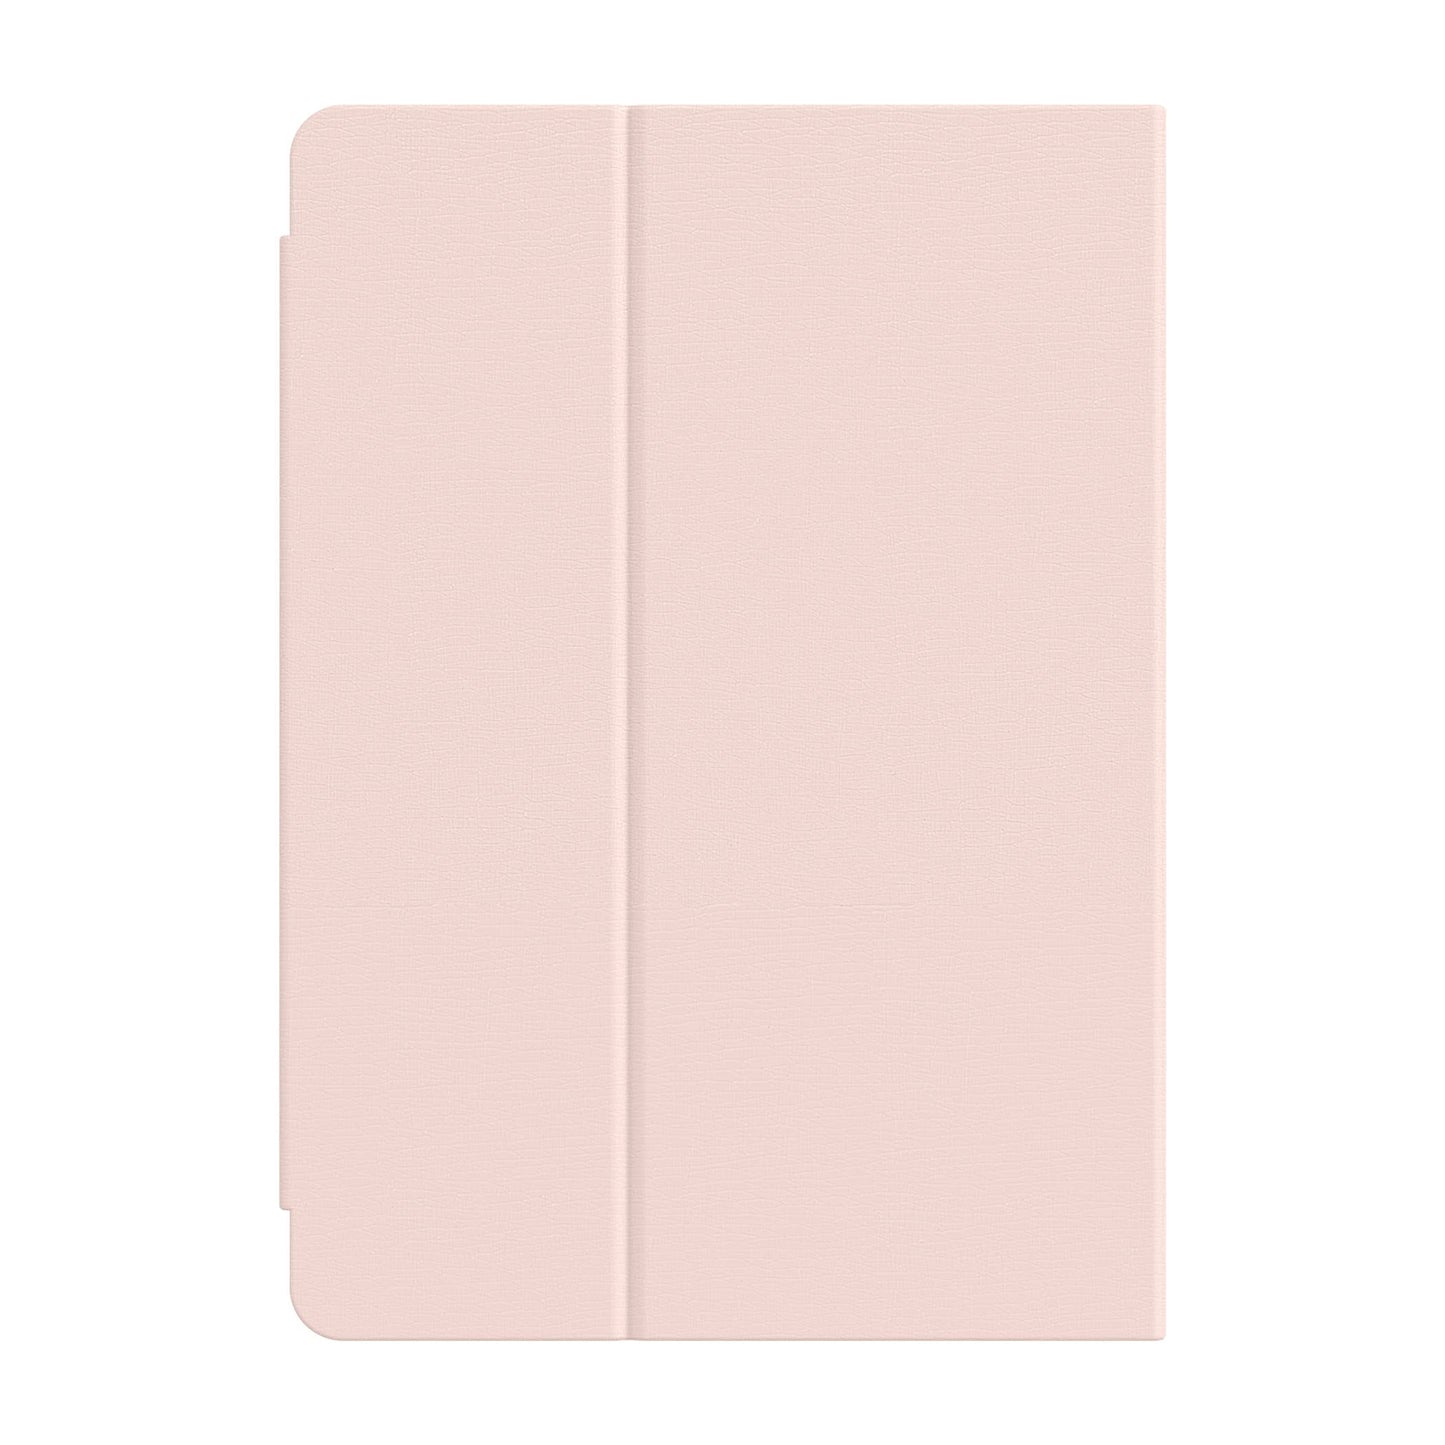 Kate Spade New York Protective Folio Case for iPad 10.2" (9th, 8th & 7th Generation) - Hollyhock/Blush/Clear/Blush Lambskin/Blush Tonal Closure